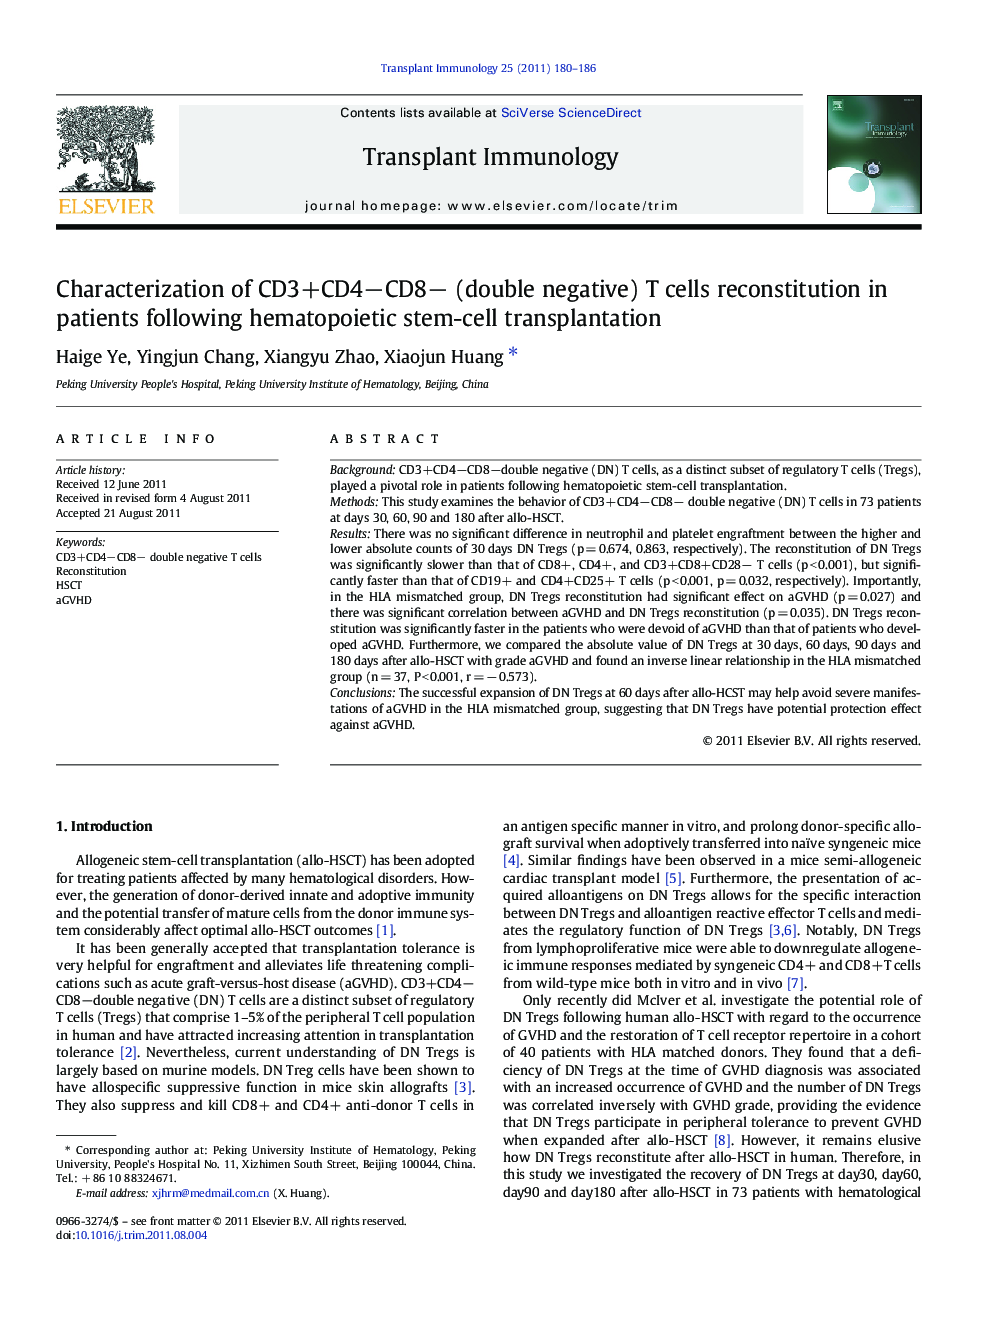 Characterization of CD3+CD4âCD8â (double negative) T cells reconstitution in patients following hematopoietic stem-cell transplantation